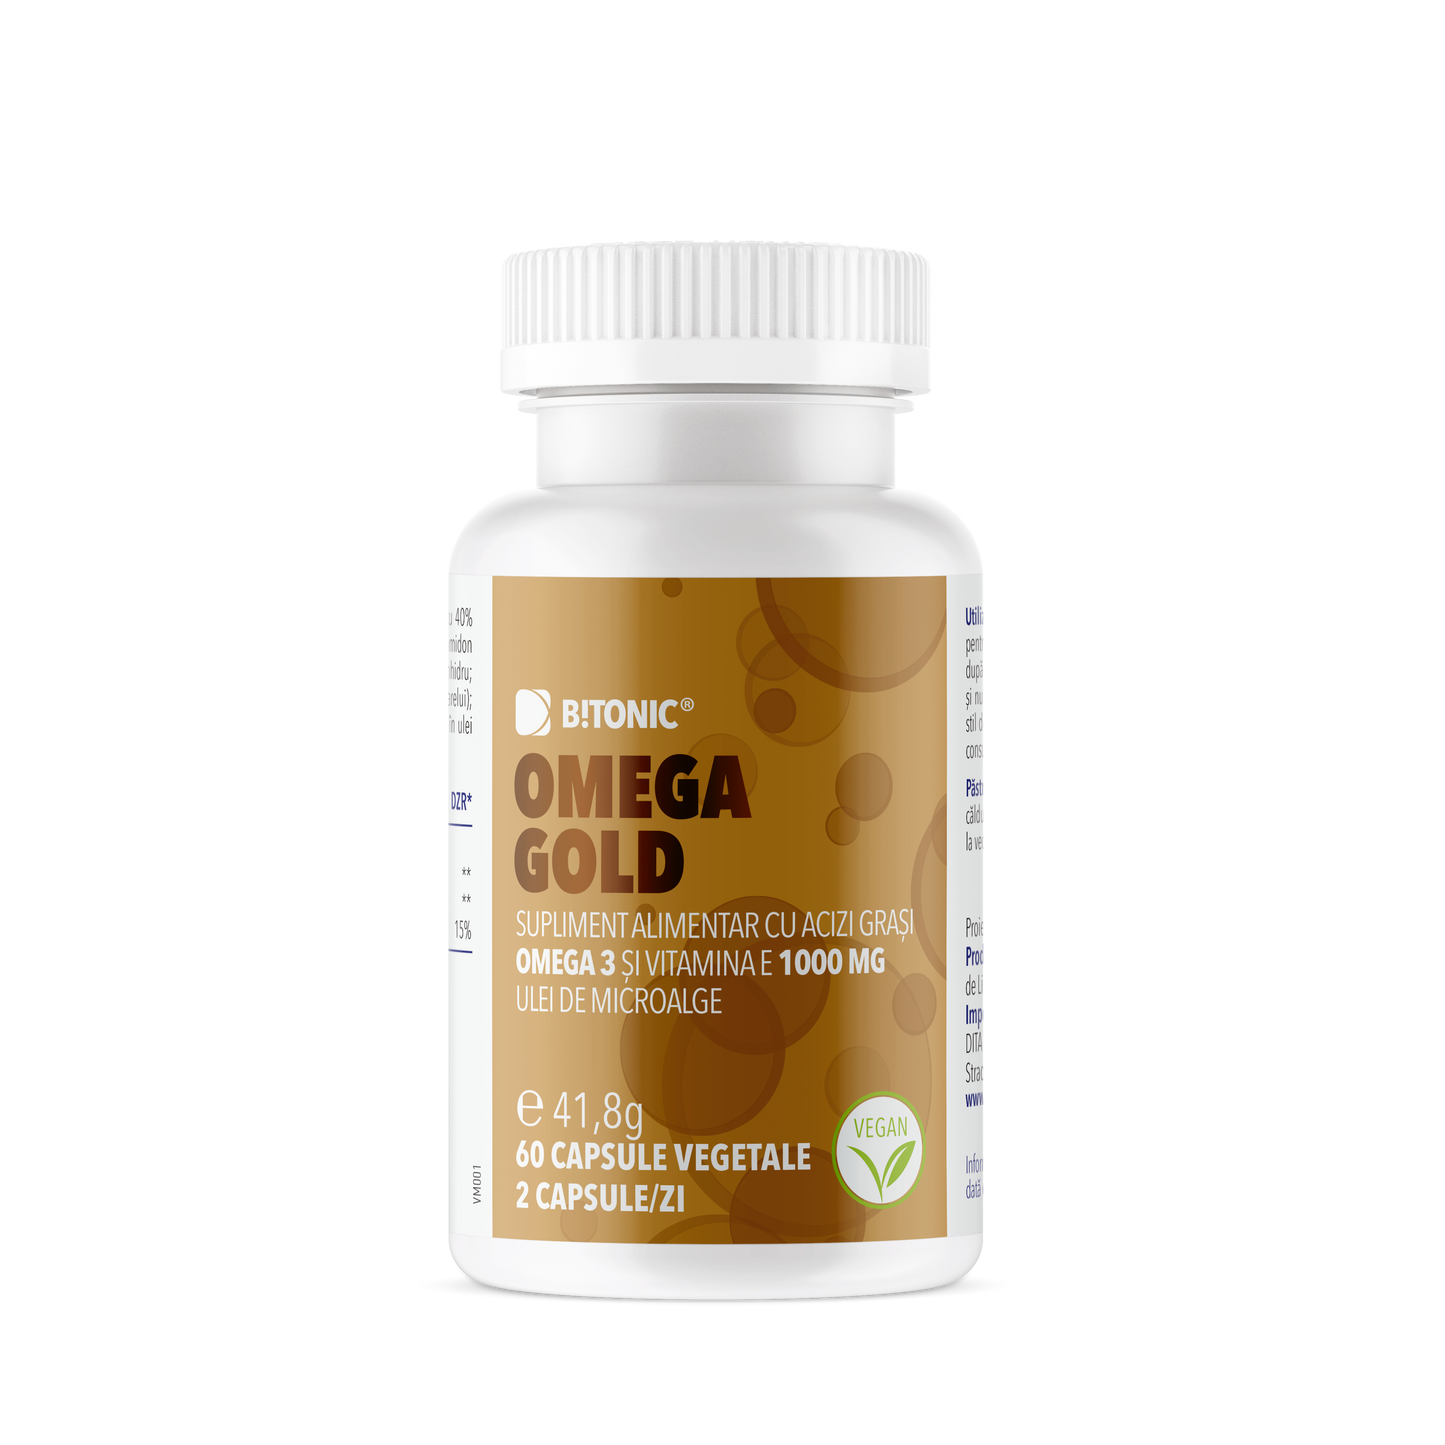 B!TONIC® Golden Oils Forte - The vegan omega-3 complex